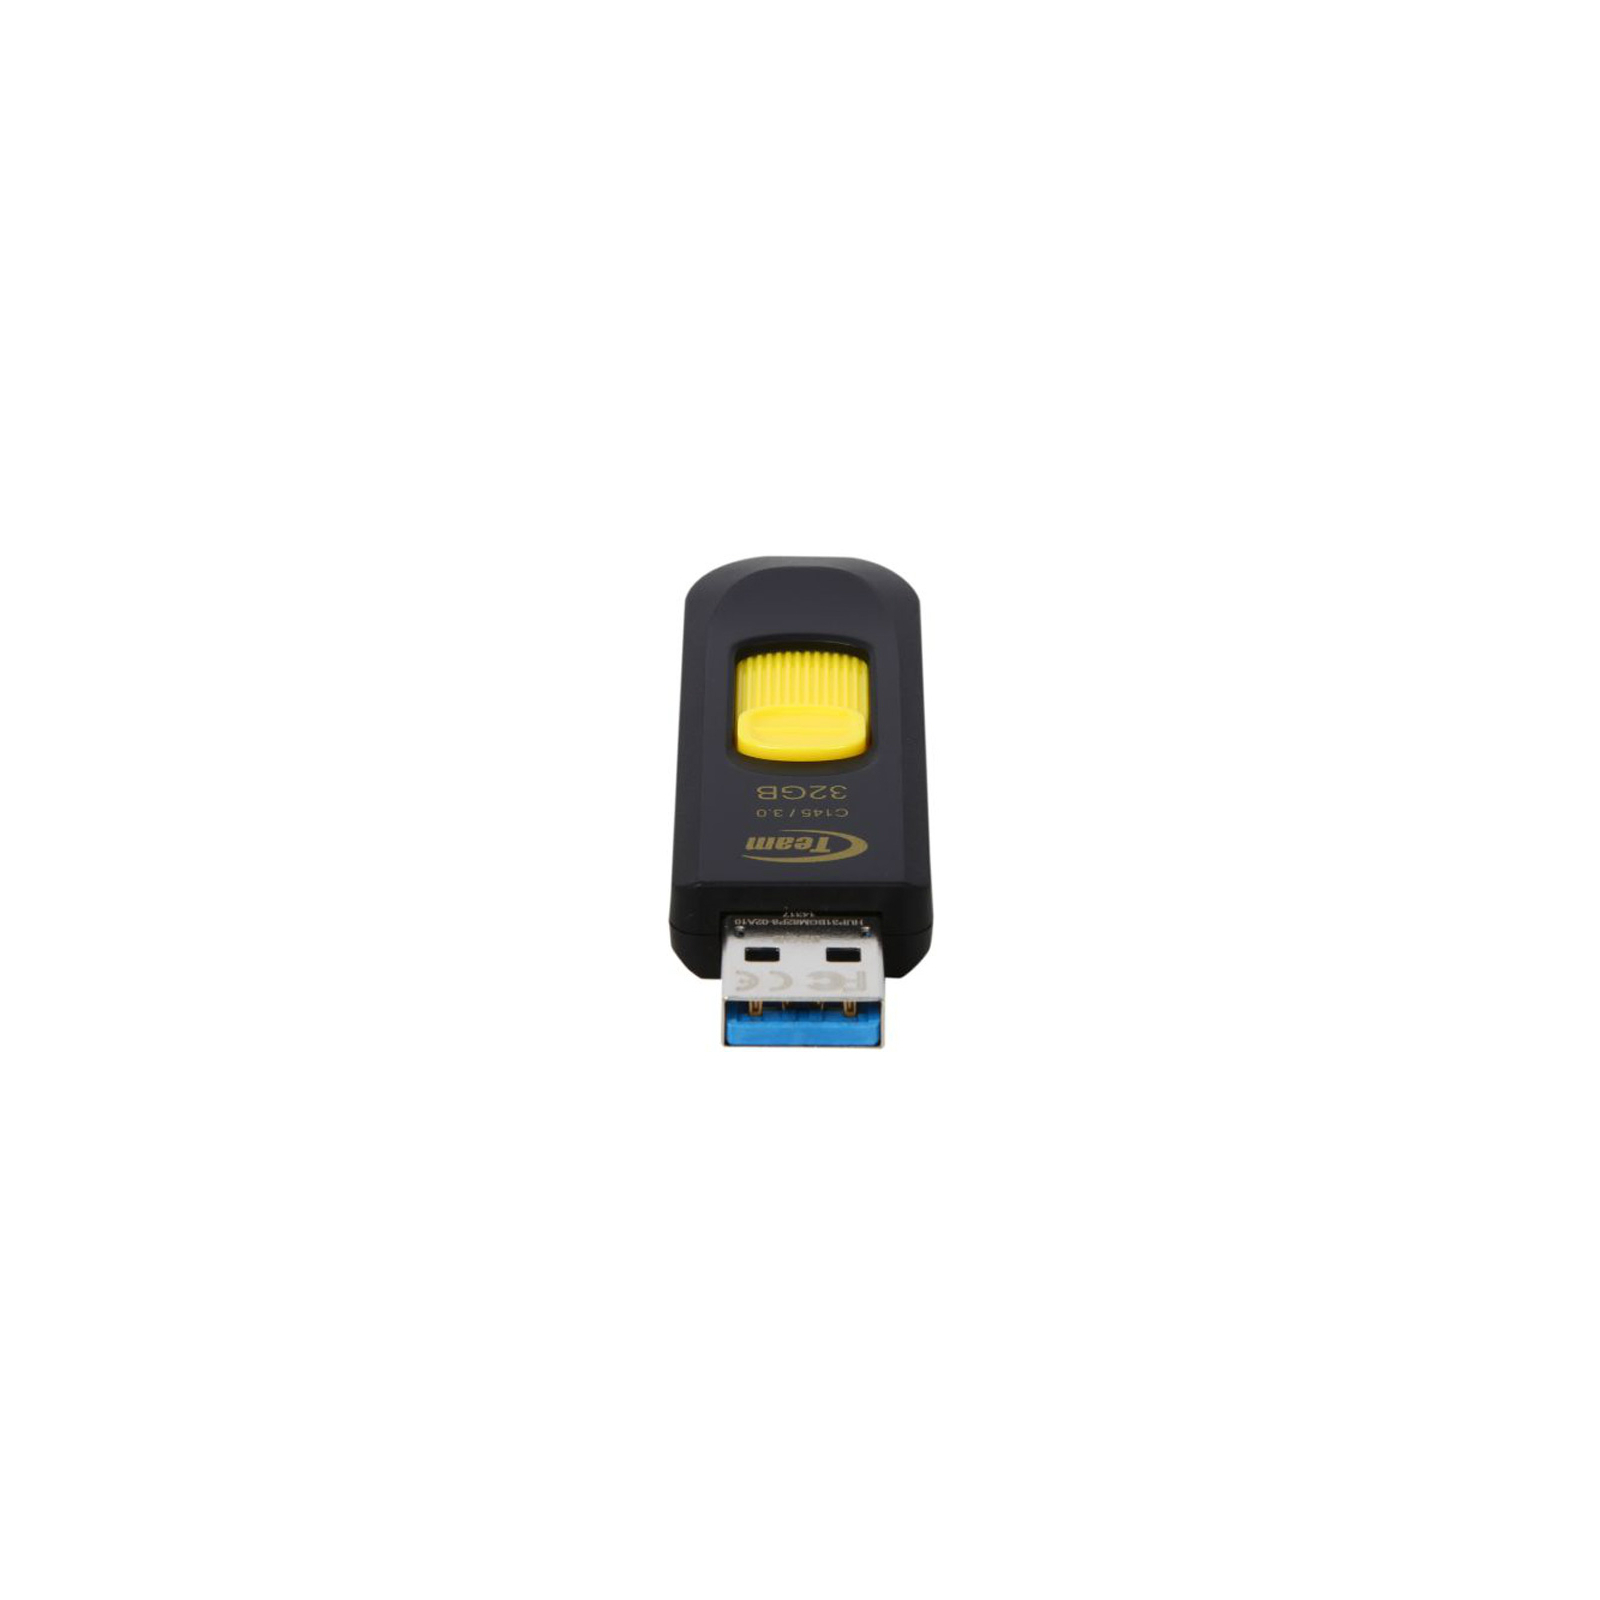 USB флеш накопитель Team 32GB C145 Yellow USB 3.0 (TC145332GY01) изображение 4